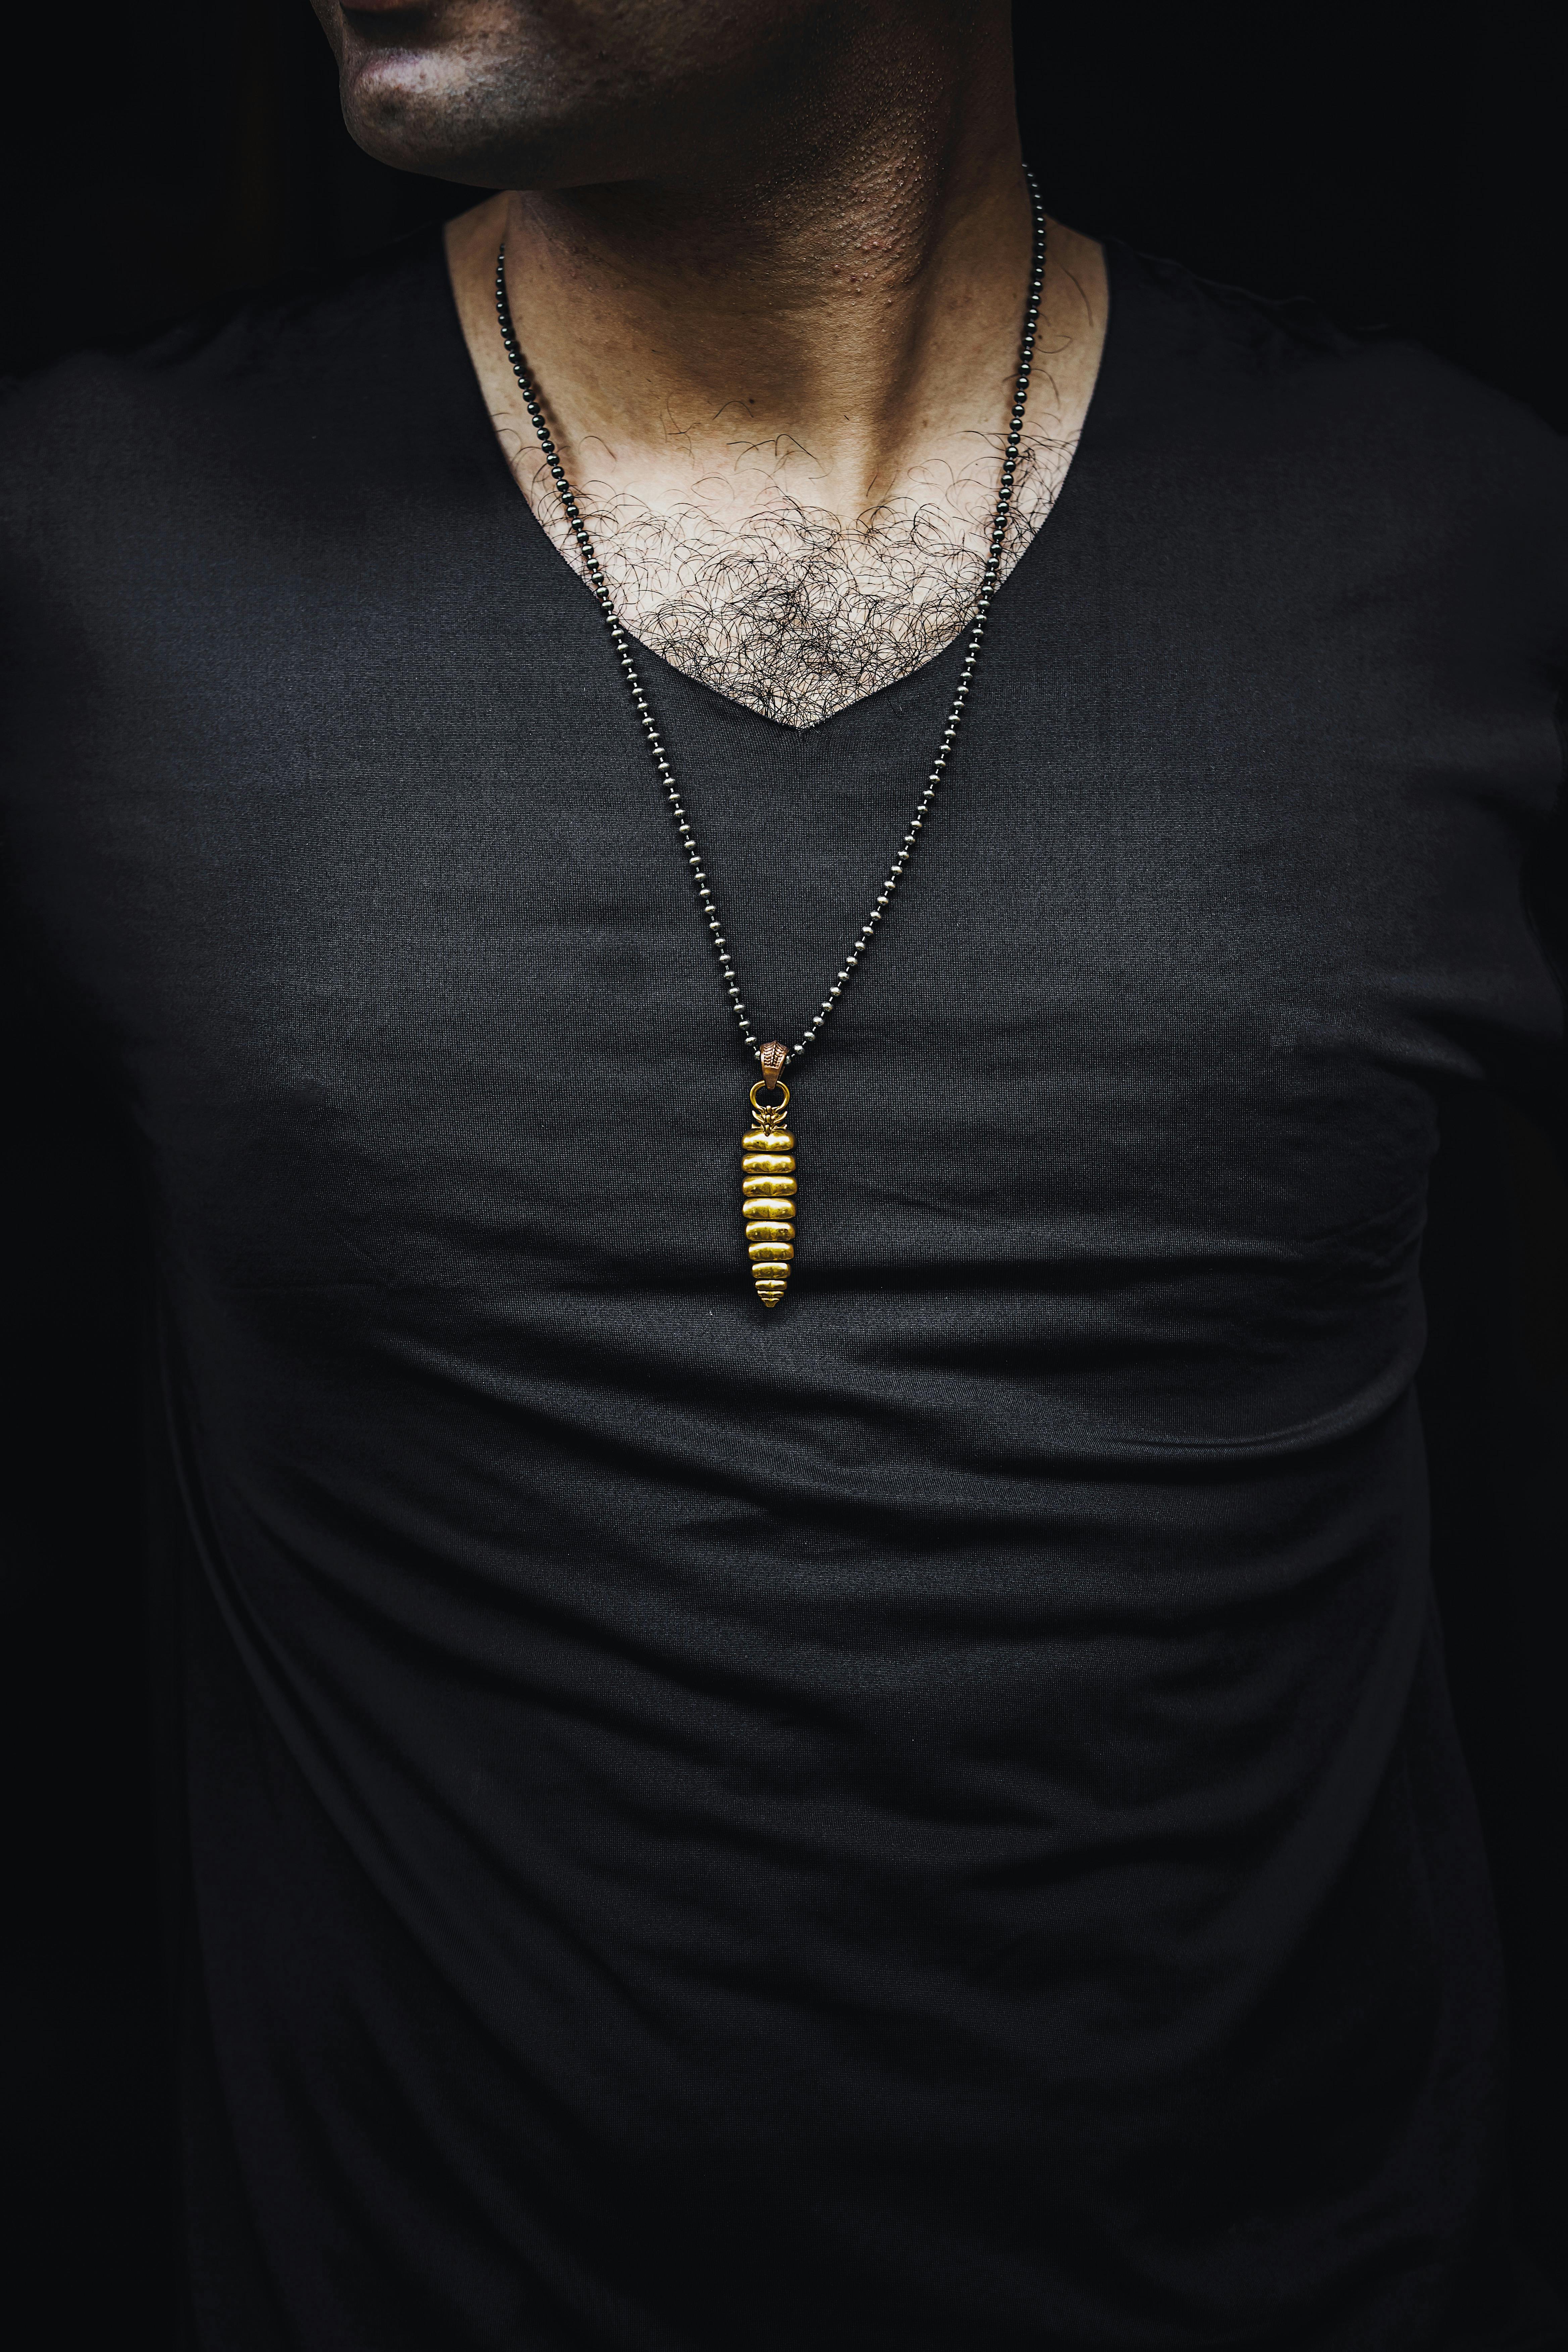 Man Wearing Rattlesnake Tail Pendant Necklace and Wristwatch · Free Stock  Photo